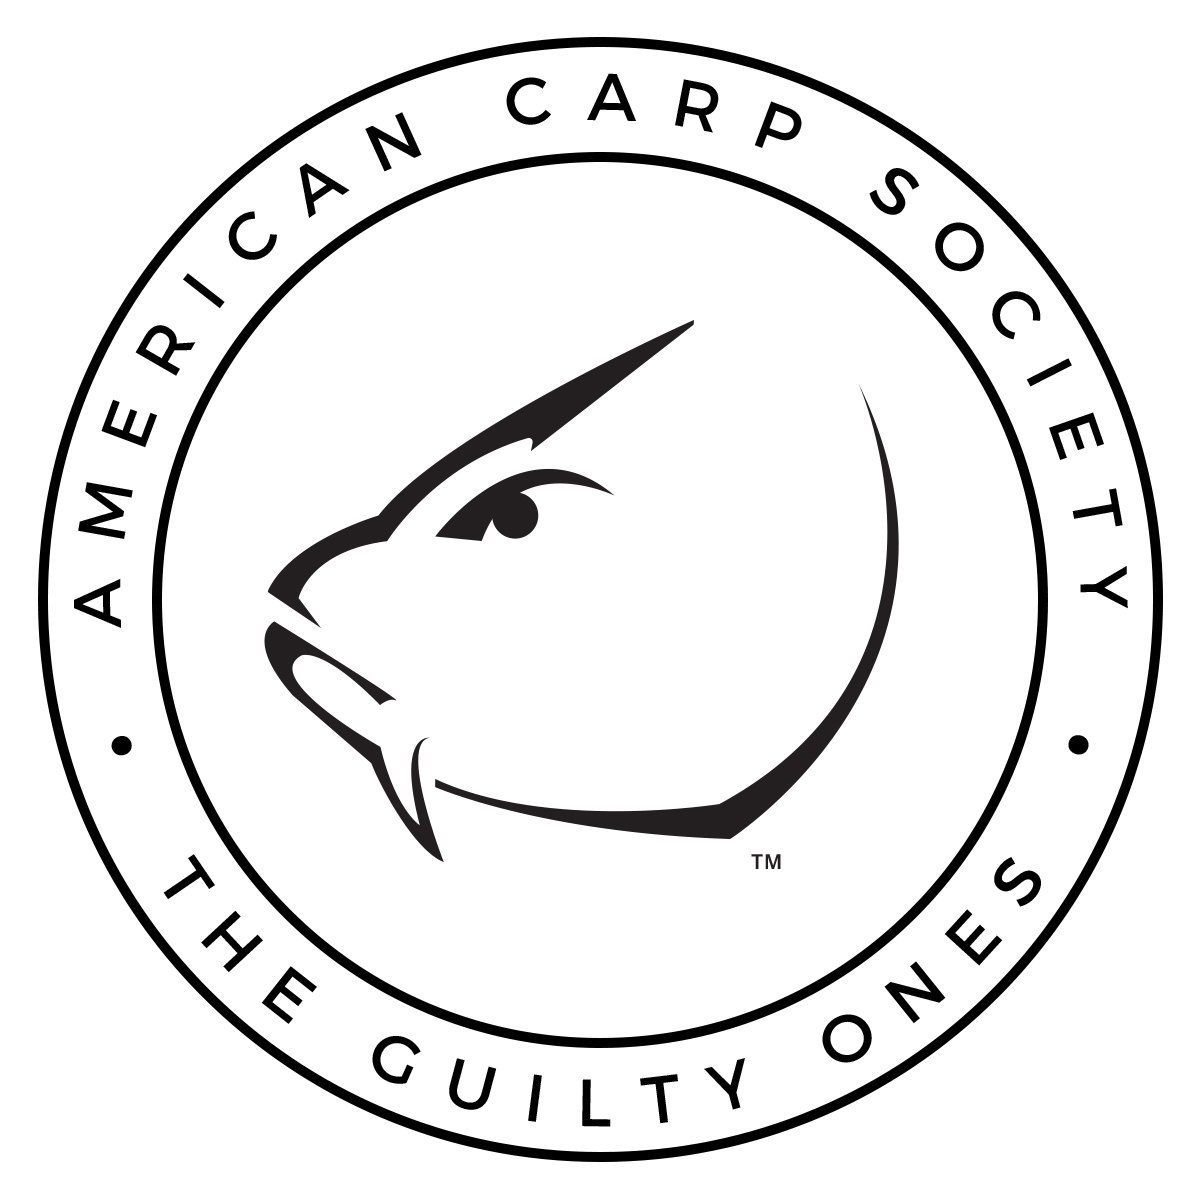 NEW Carp-Badge-Logo copy 4 copy.jpg